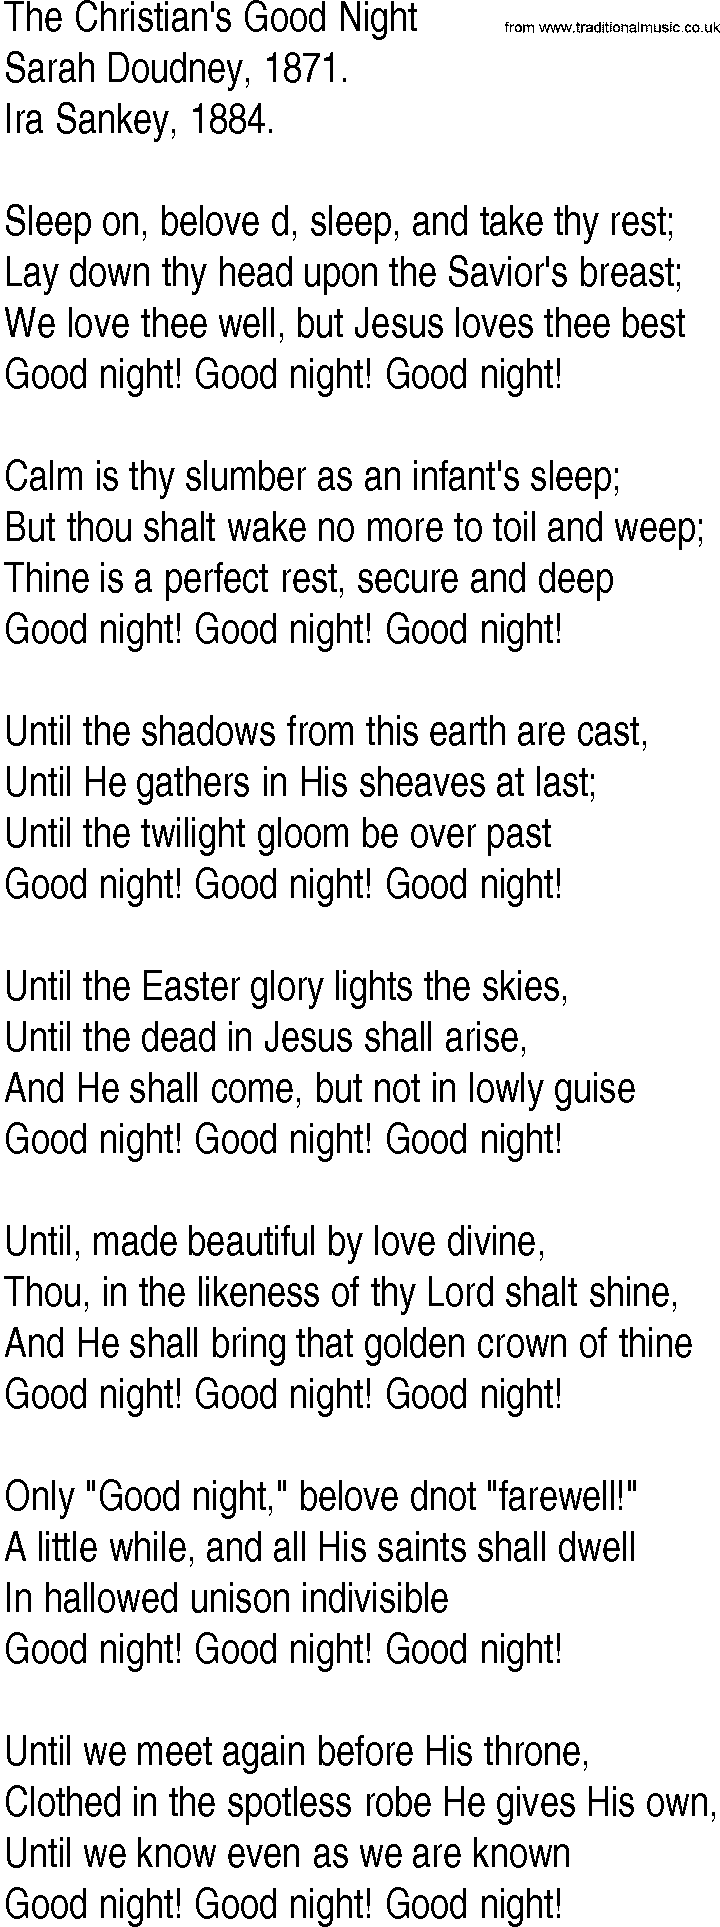 Hymn and Gospel Song: The Christian's Good Night by Sarah Doudney lyrics